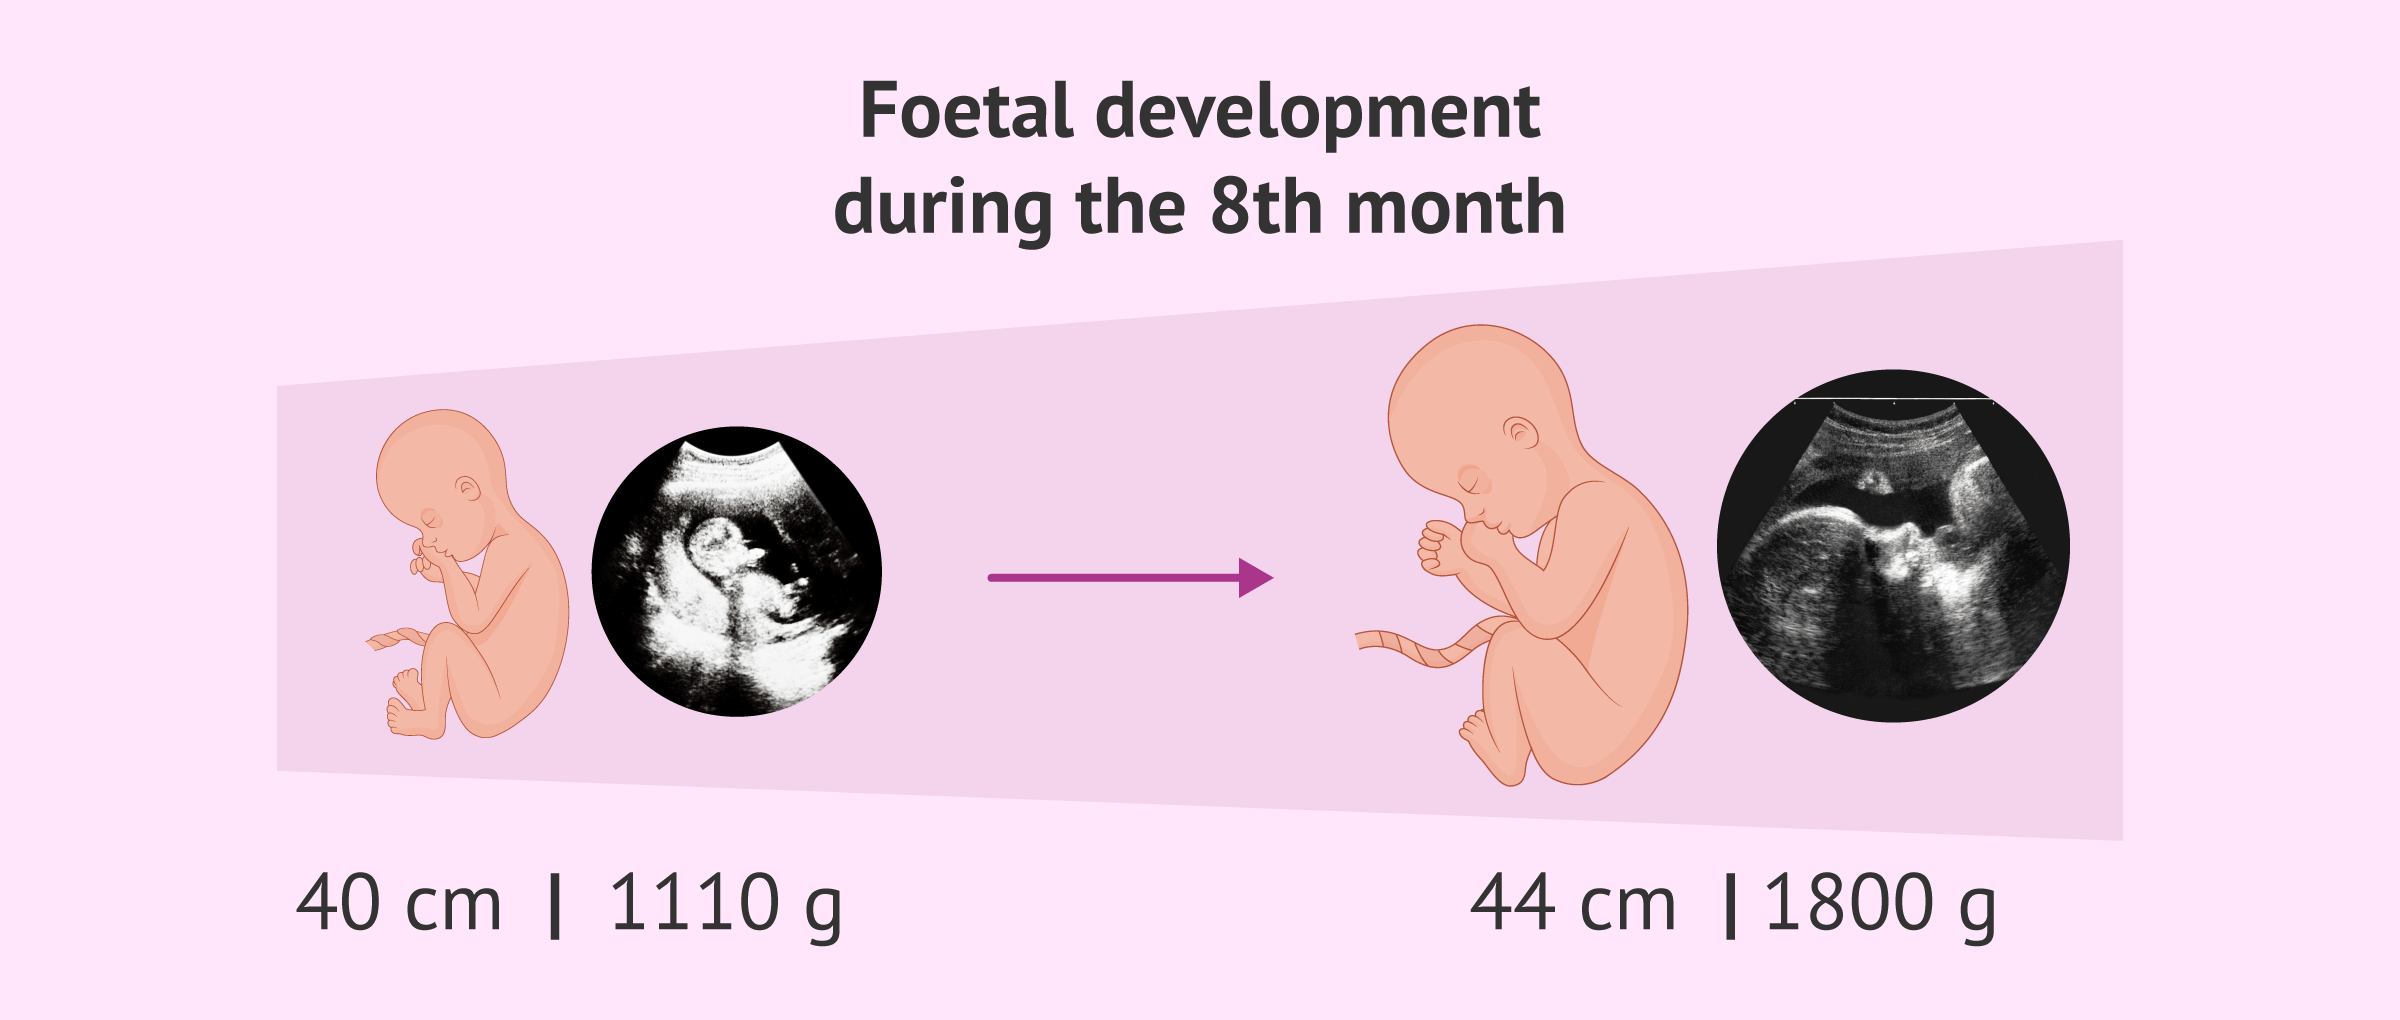 Fetal development during month 8 of pregnancy